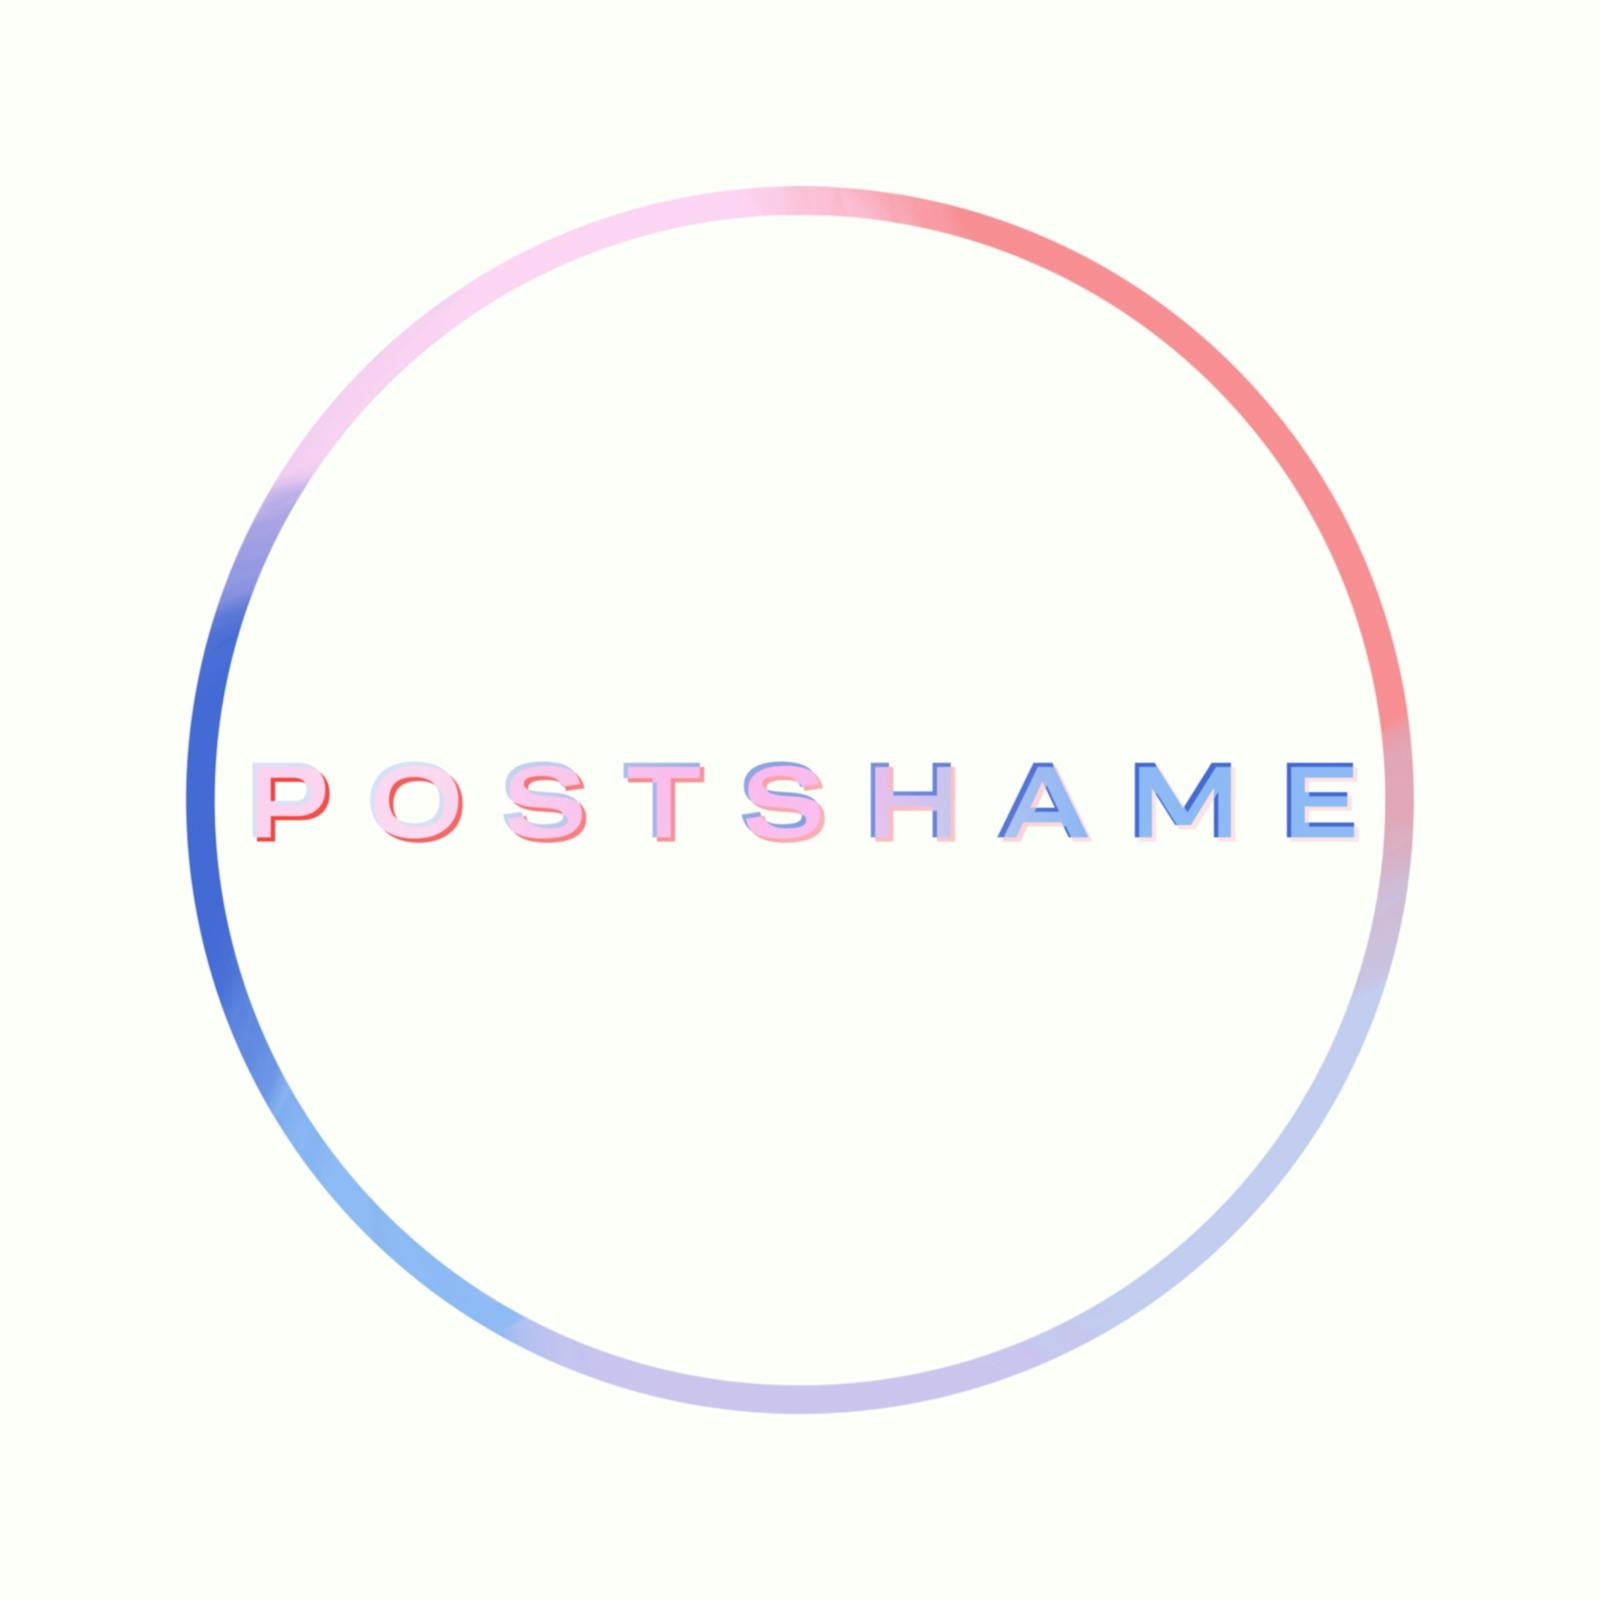 About #PostShame